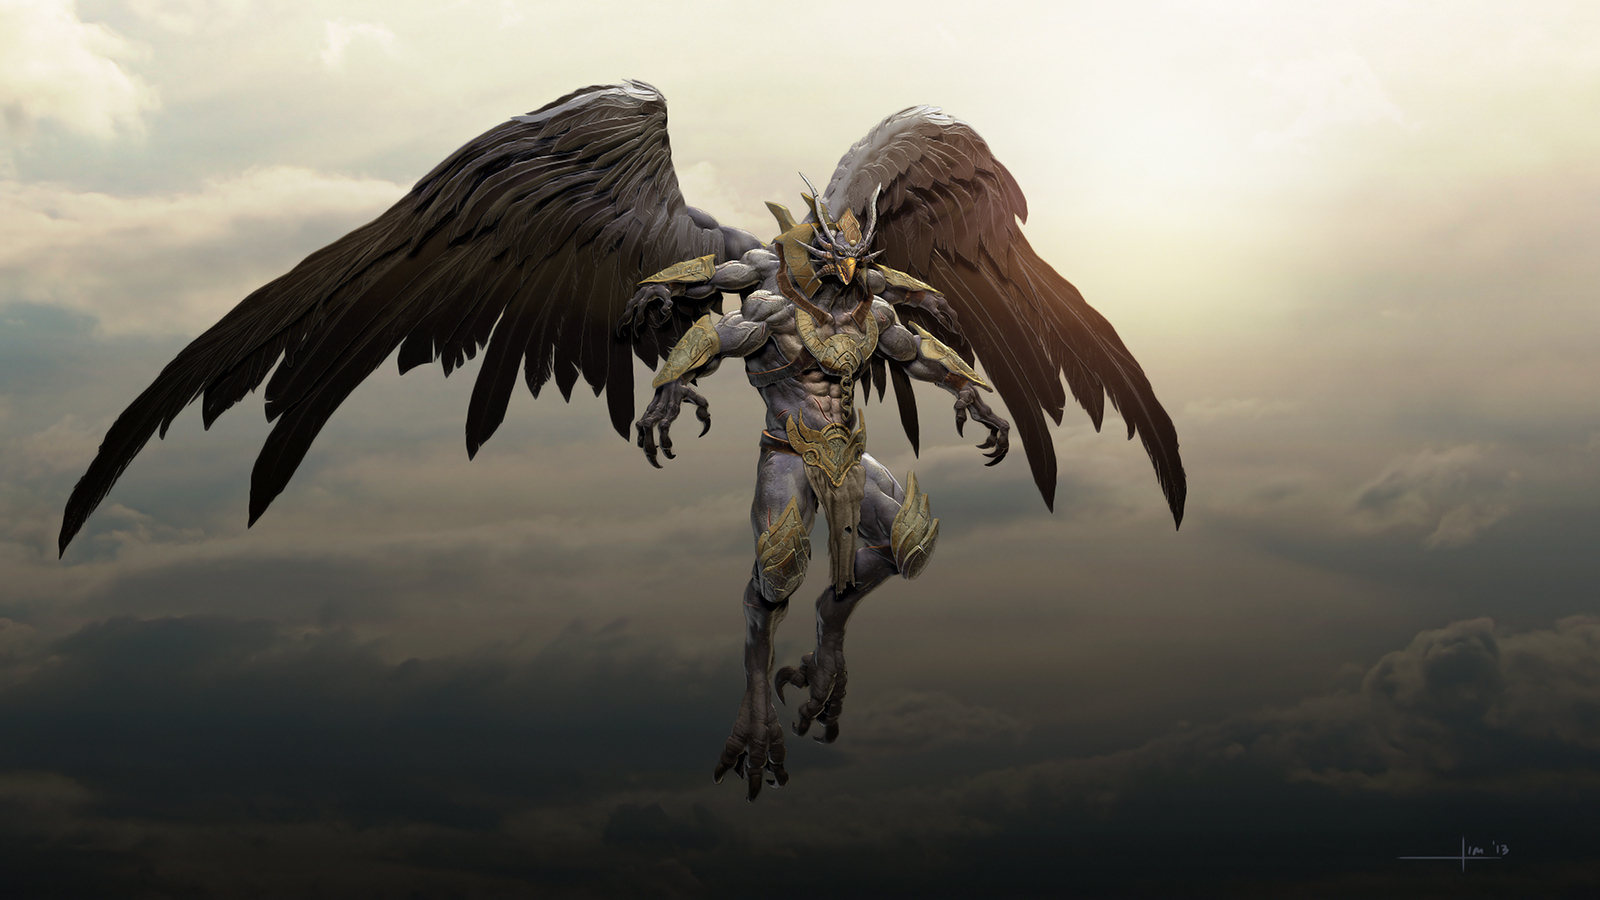 The mighty Garuda or Aquila